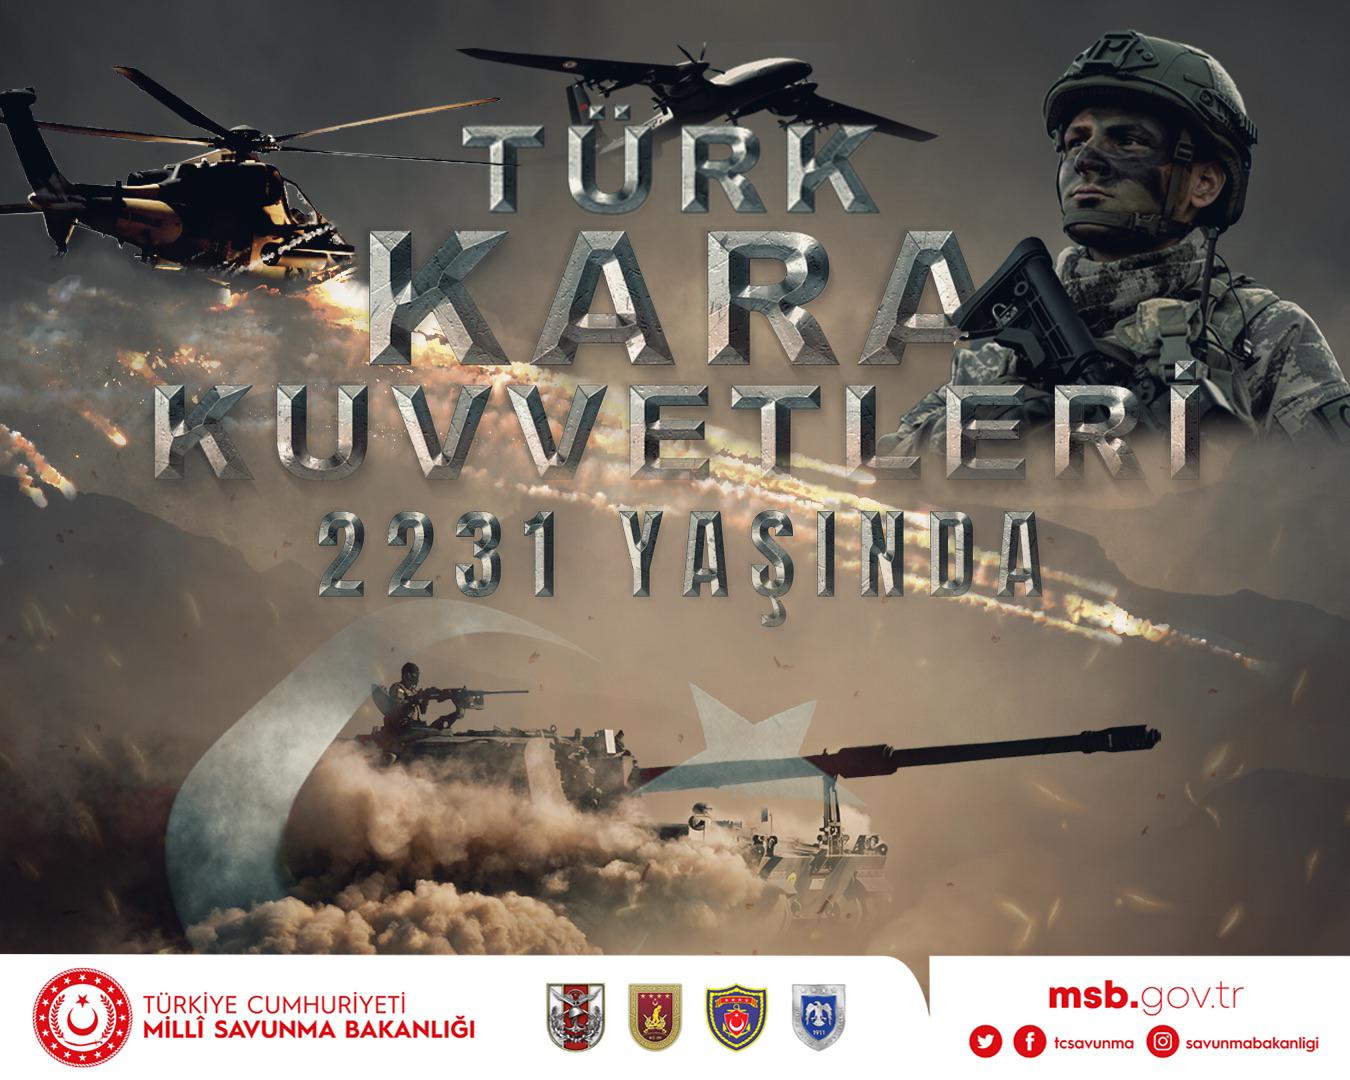 Turk Kara Kuvvetleri-2231yasinda